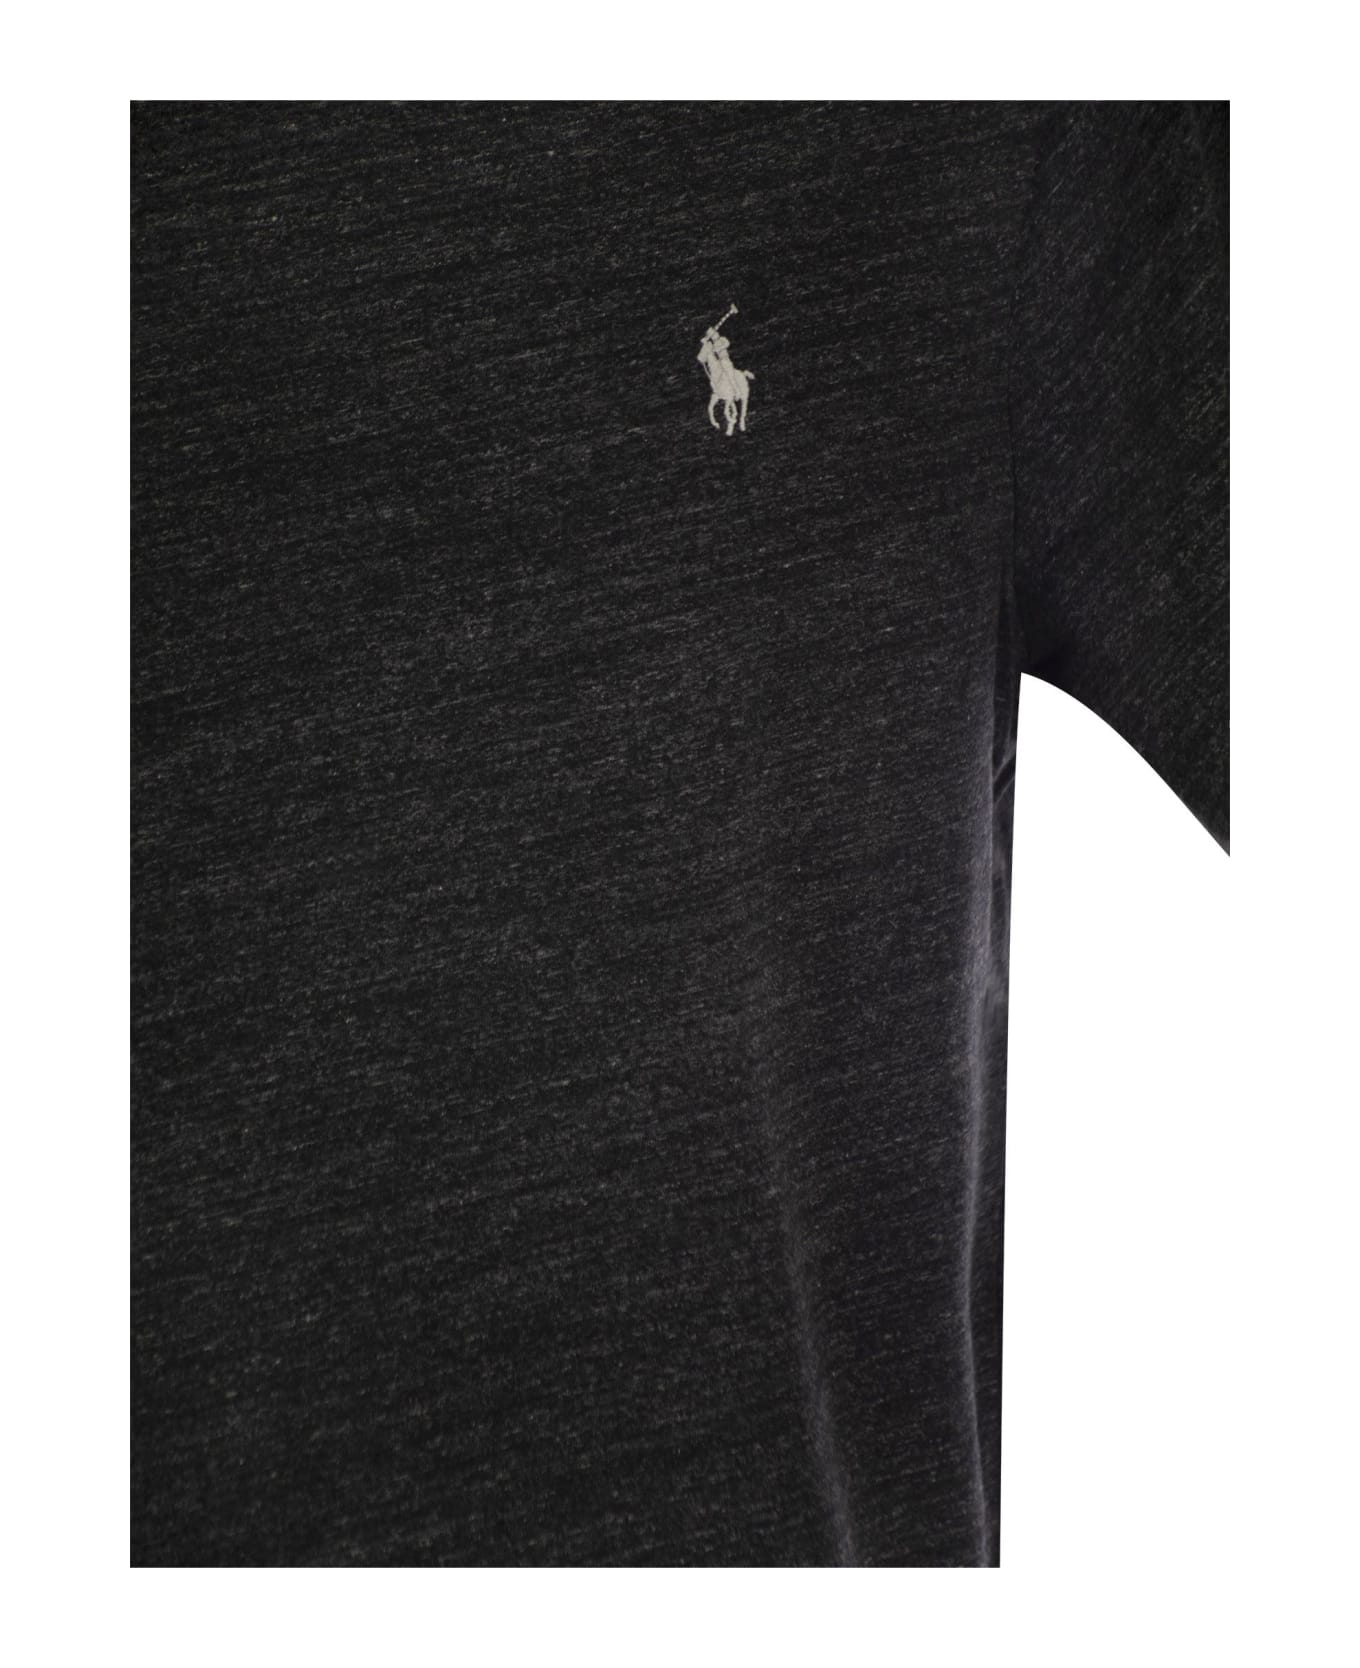 Polo Ralph Lauren Slim-fit Jersey T-shirt - Smoke